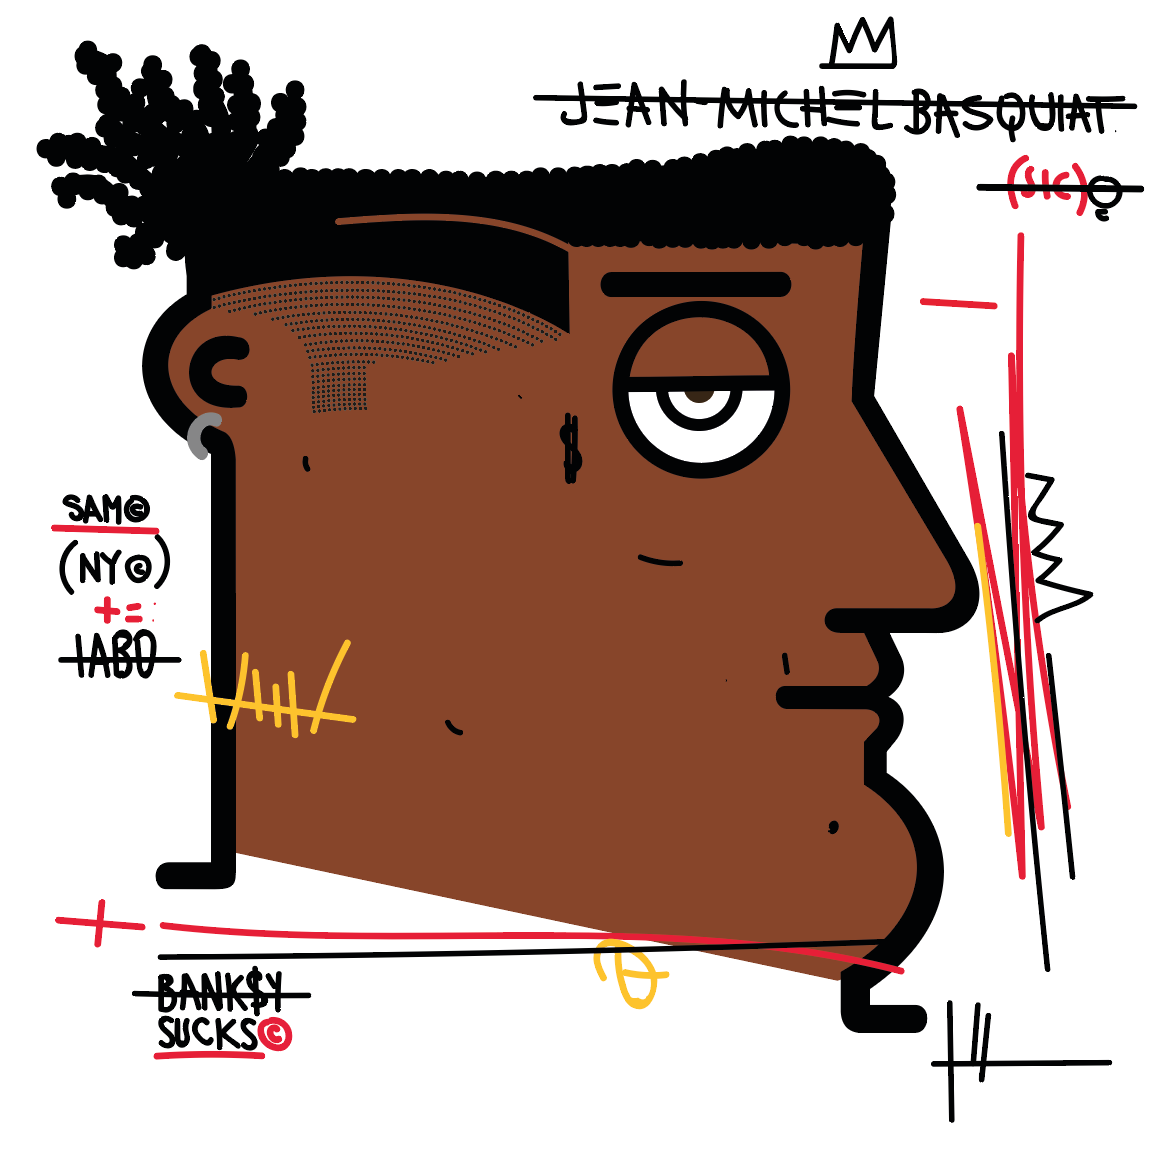 Picture of Banksy Sucks (Basquiat DISSING Banksy)